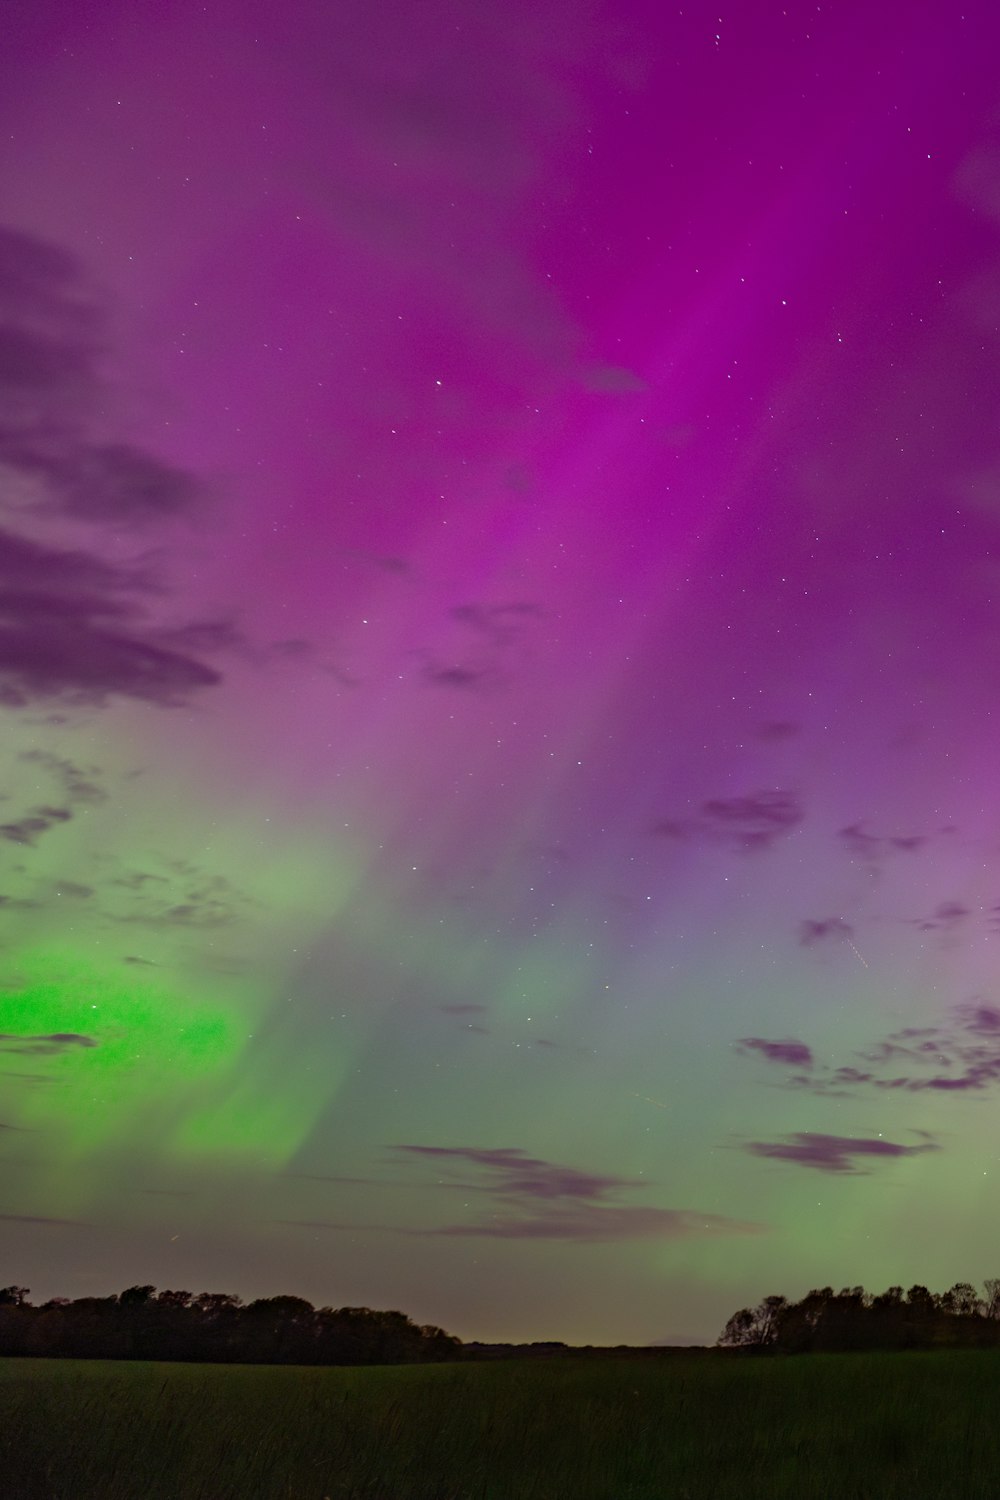 a purple and green aurora bore in the sky